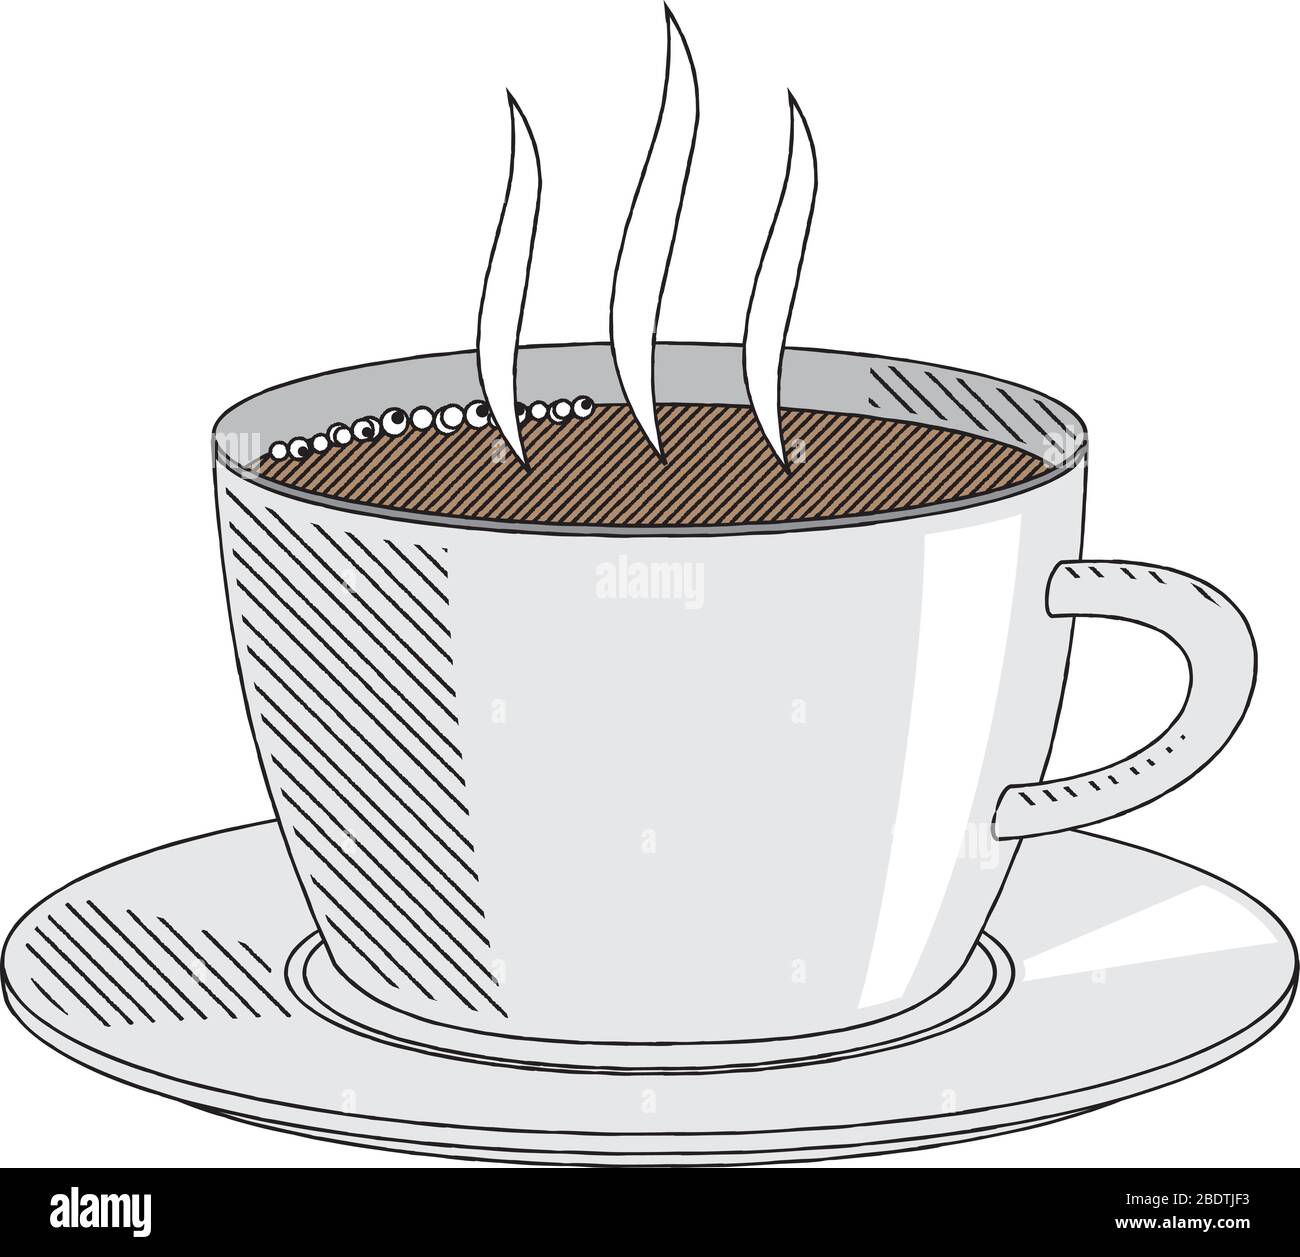 https://c8.alamy.com/comp/2BDTJF3/coffee-cup-tea-cup-illustration-clipart-2BDTJF3.jpg